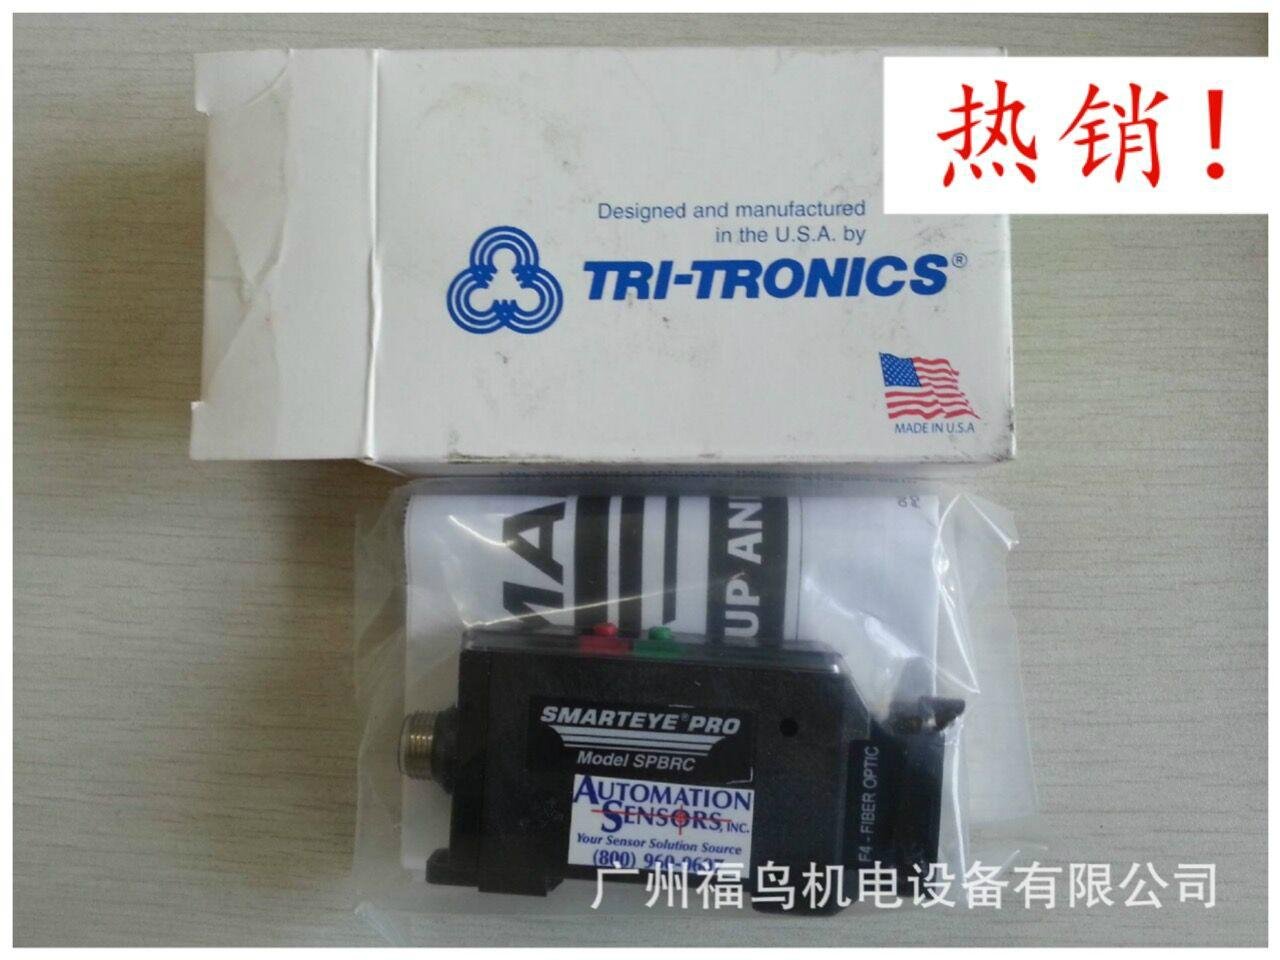 TRI-TRONICS傳感器, 型號: SPBRCF4